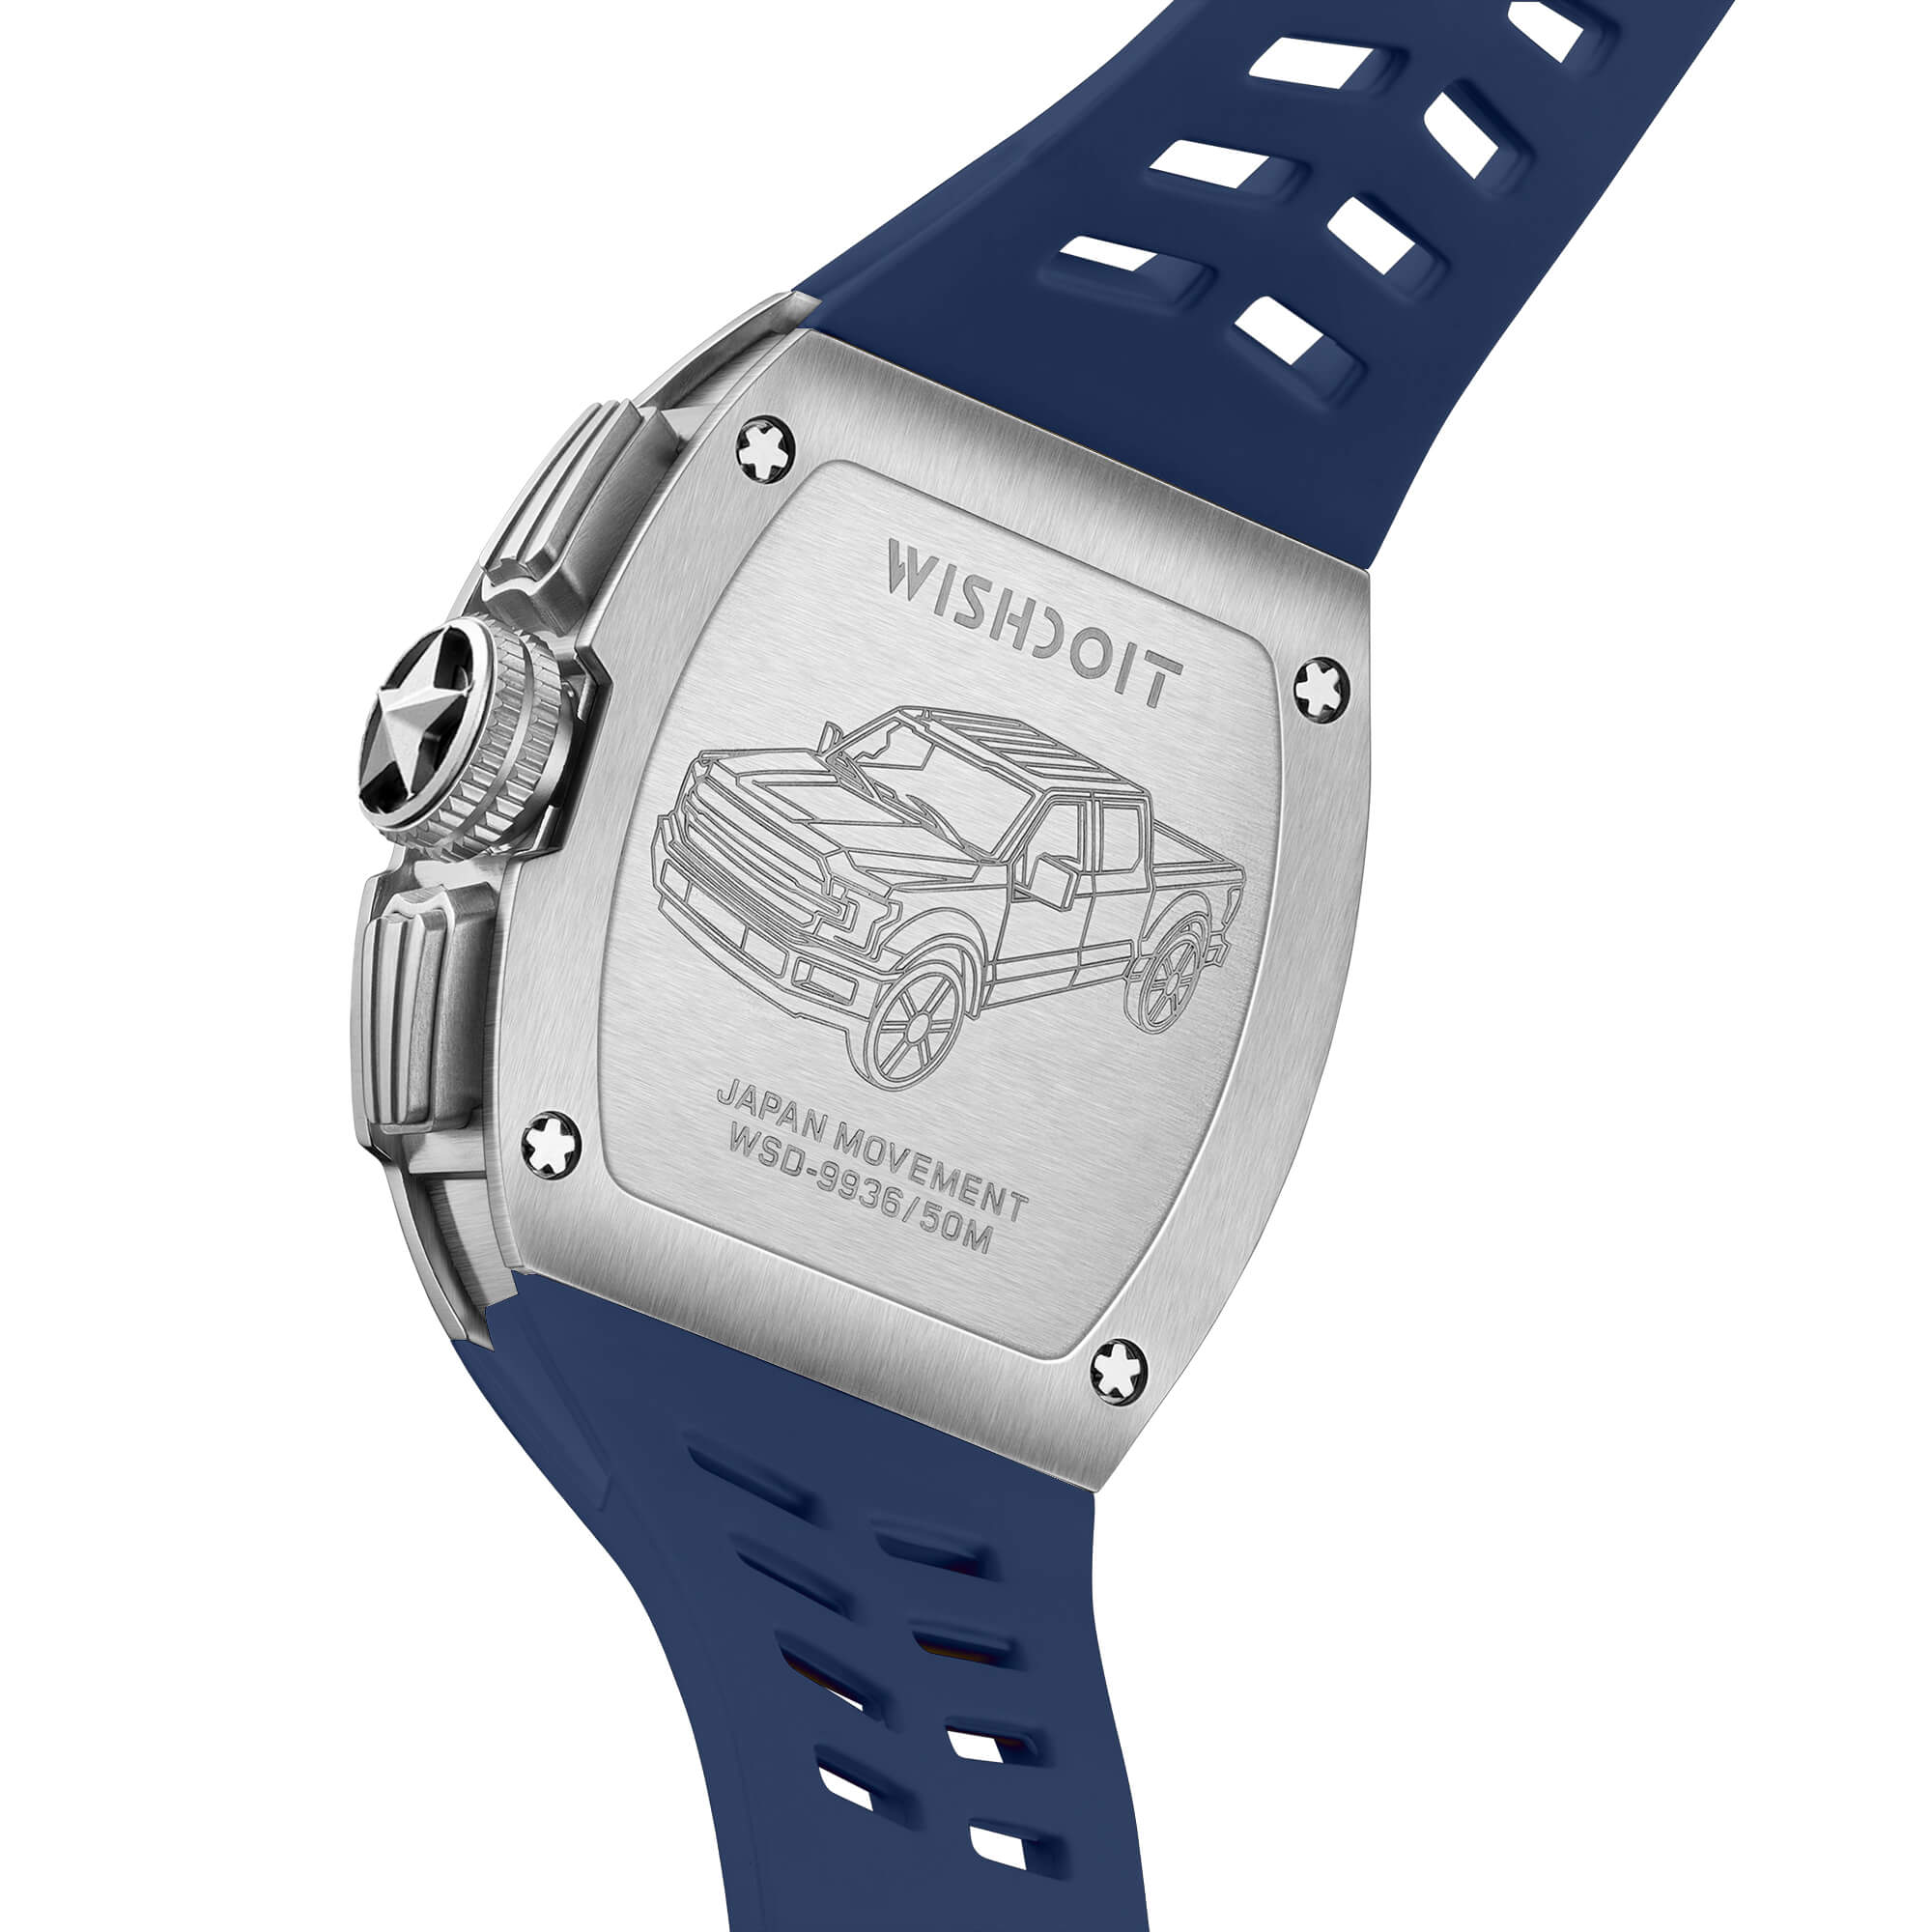 Shop Racing F-150 Series Chronograph Quartz Silver Blue Watch | Wishdoit